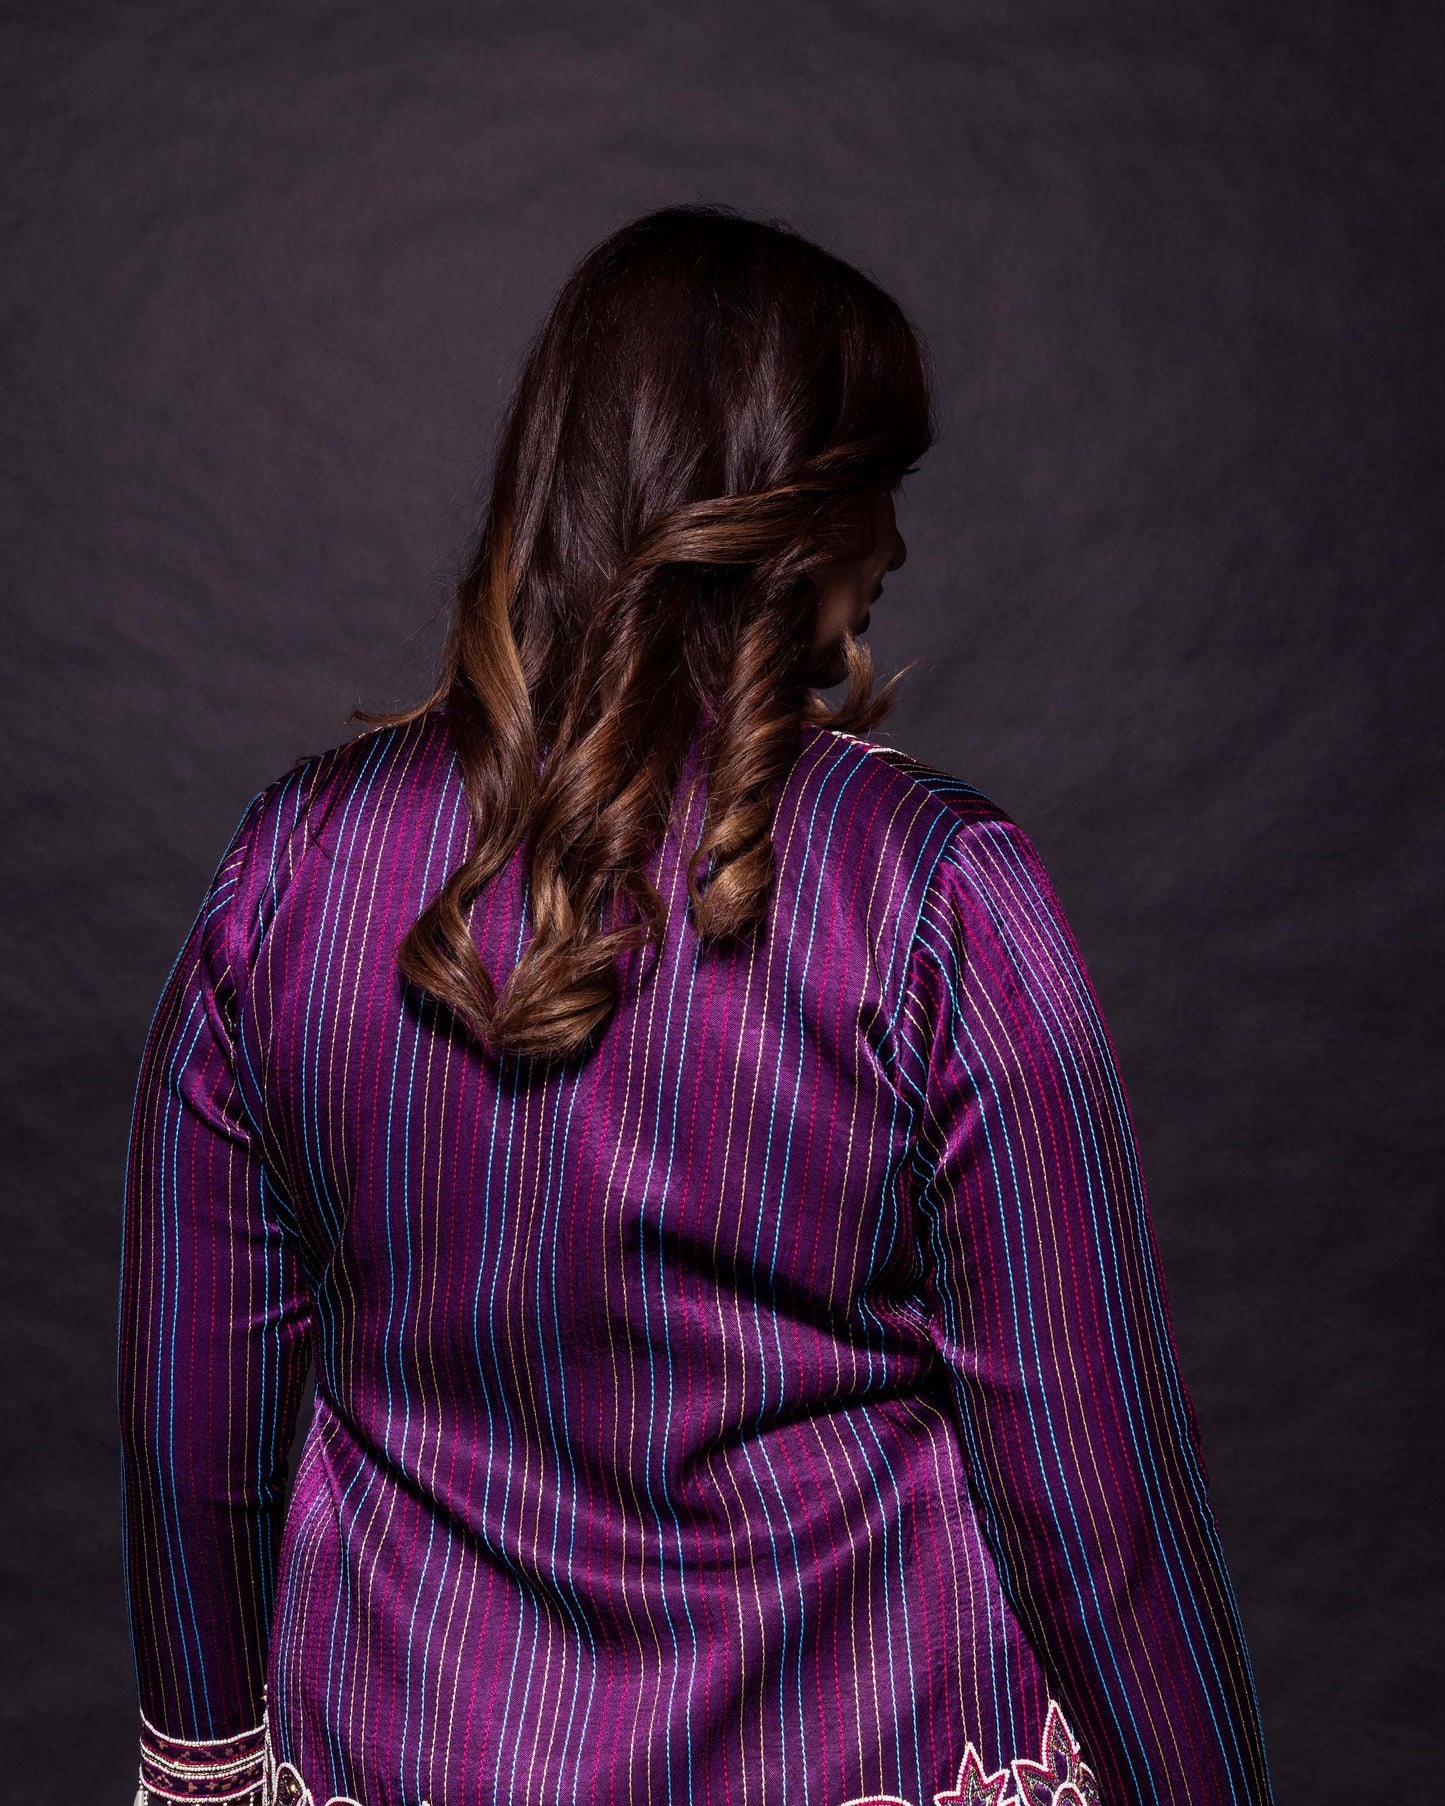 Dark Purple fully patchedworked angarkha  jacket with drape dhoti skirt